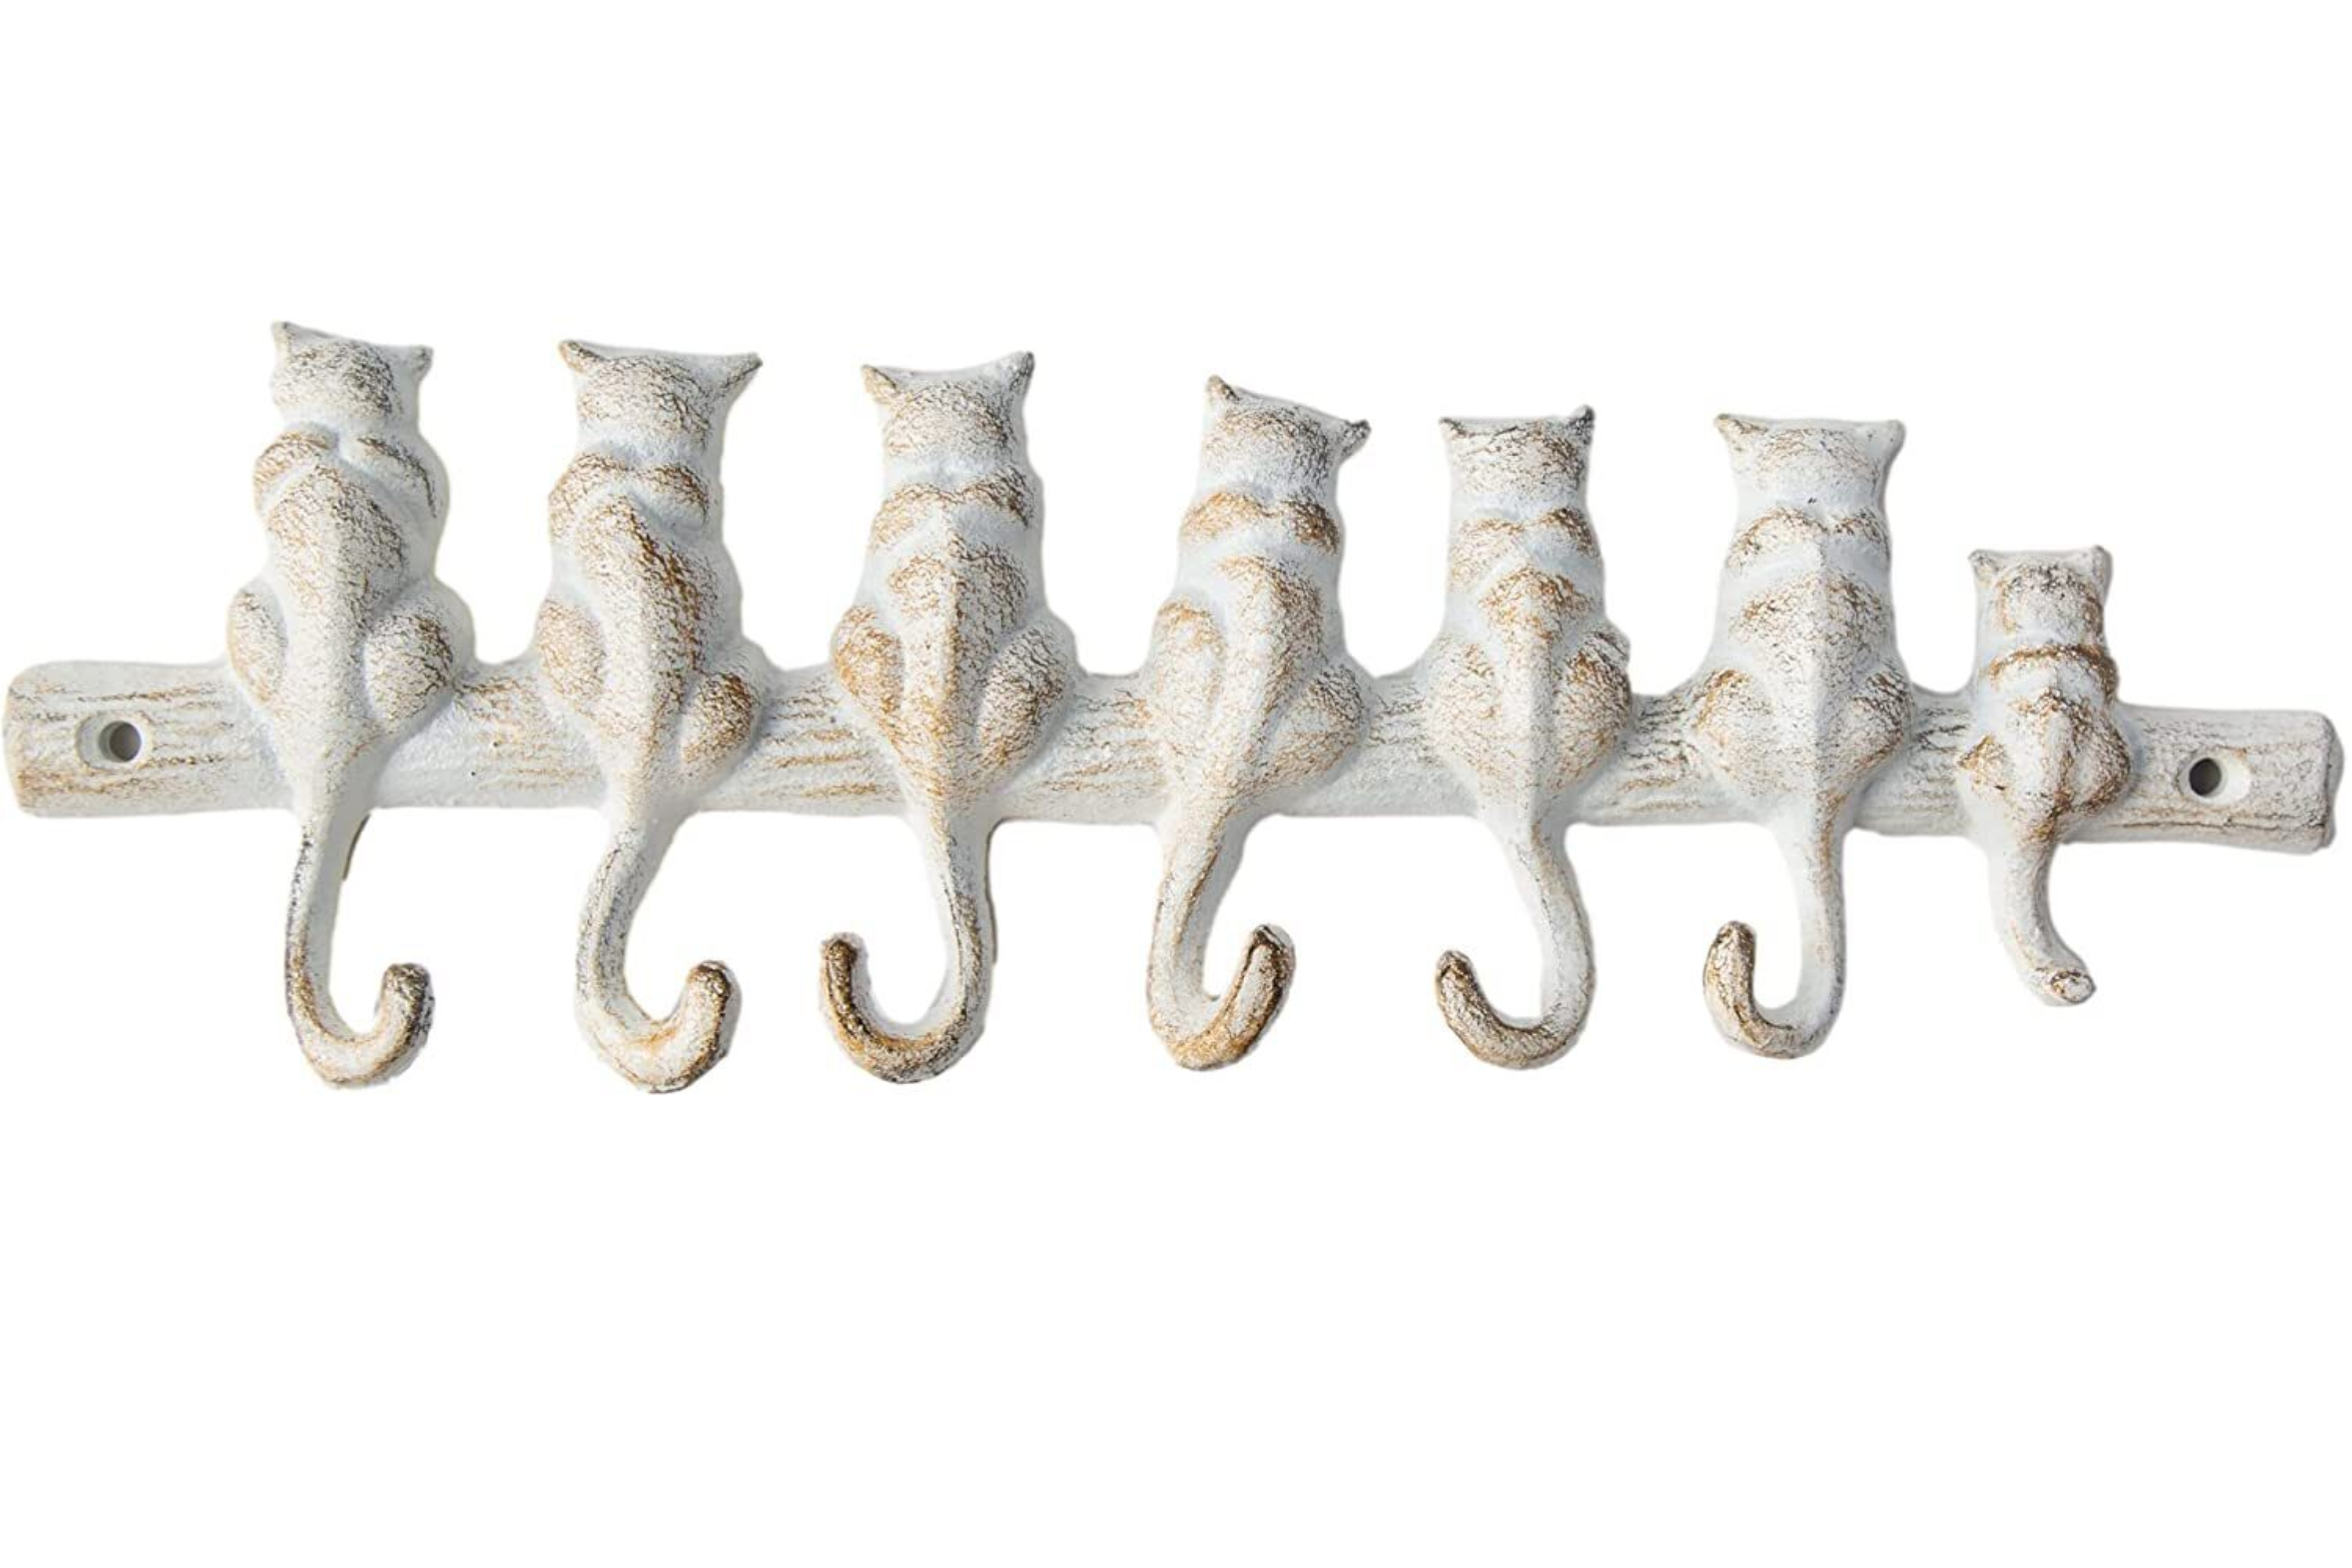 Comfify Decorative Fish Bones Wall Mounted Towel Rack Stylish Cast